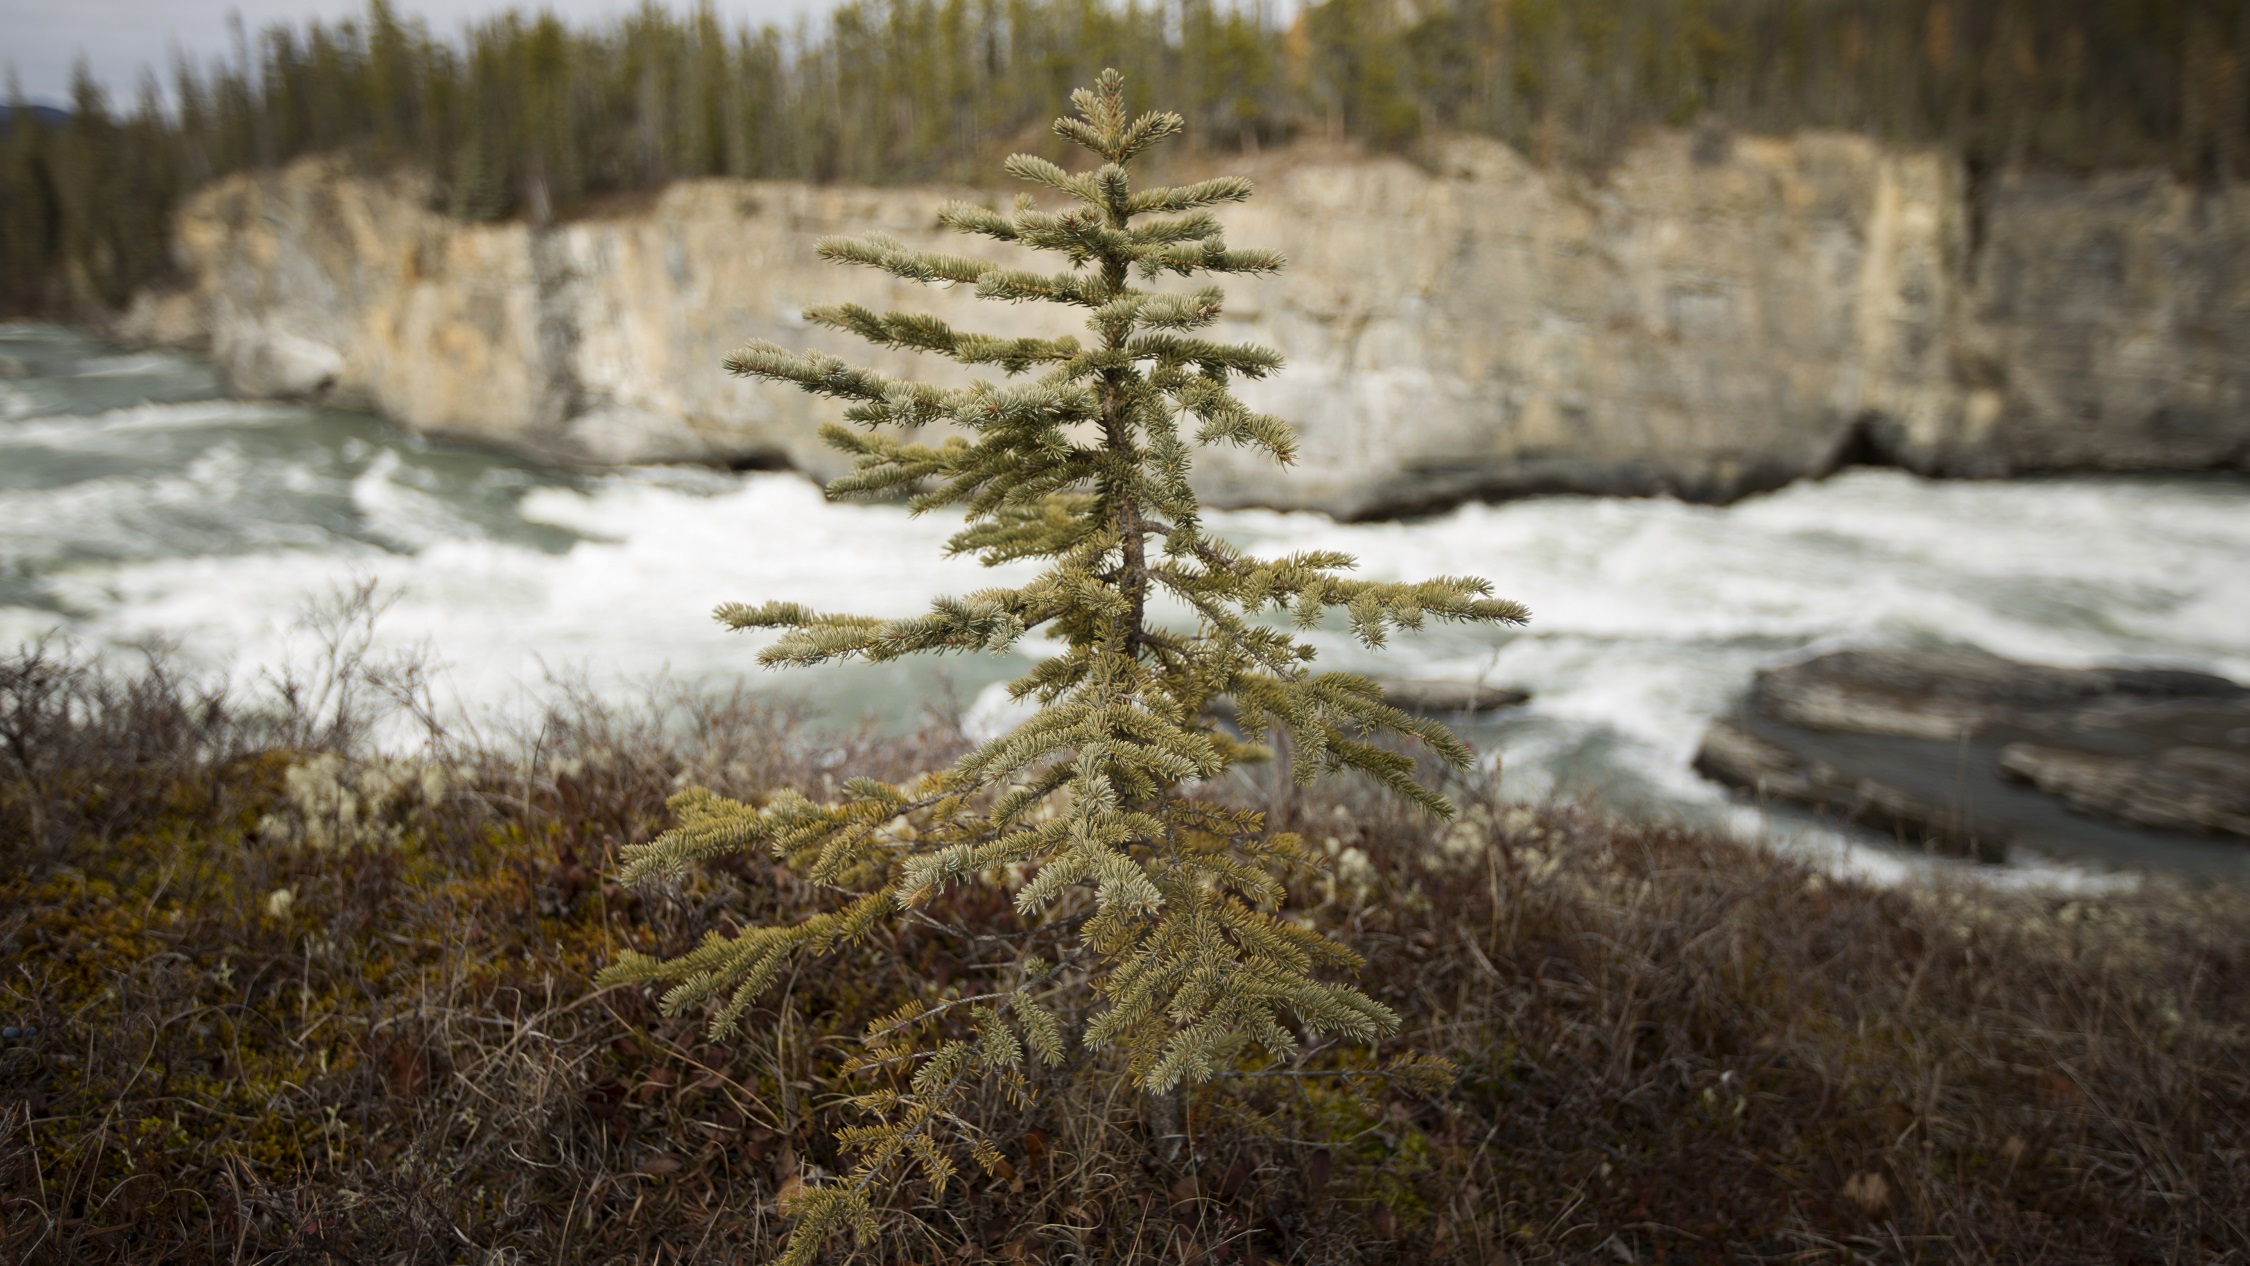 A spruce tree